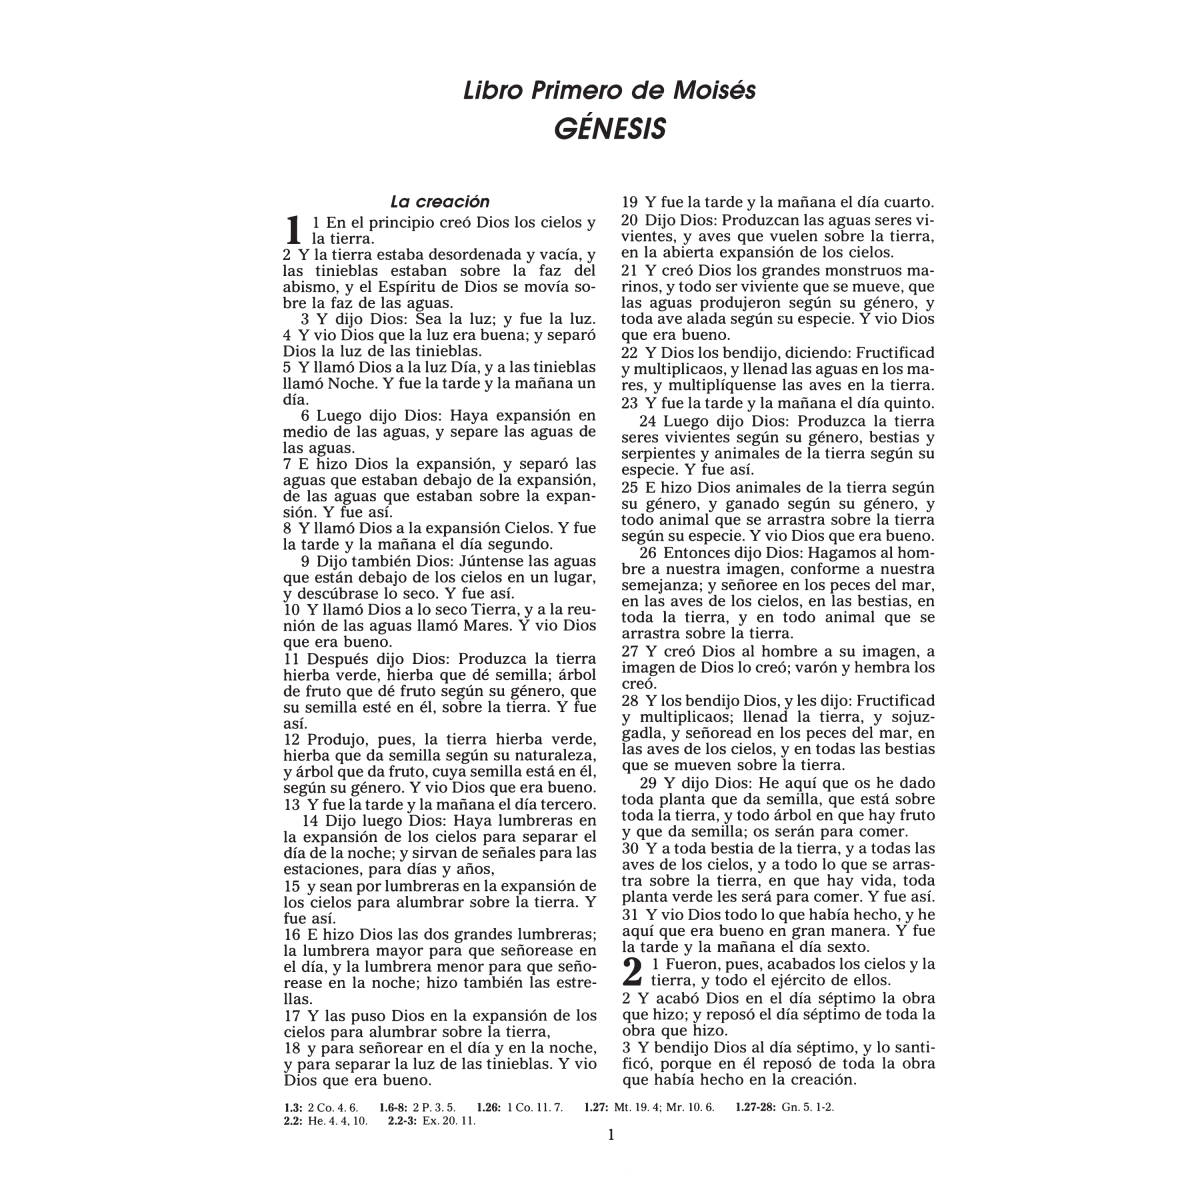 RVR60 Biblia Versión Reina Valera (Revisión de 1960)